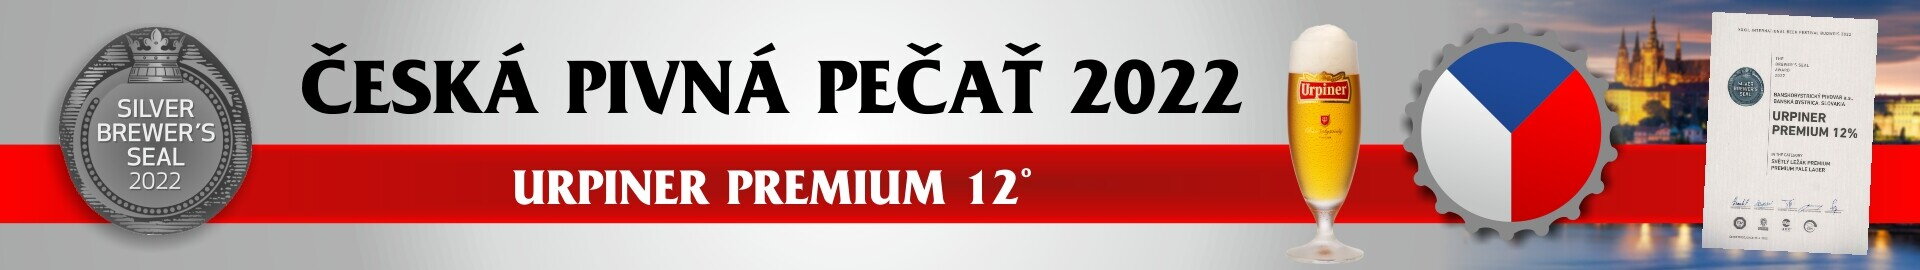 ČPP 2022